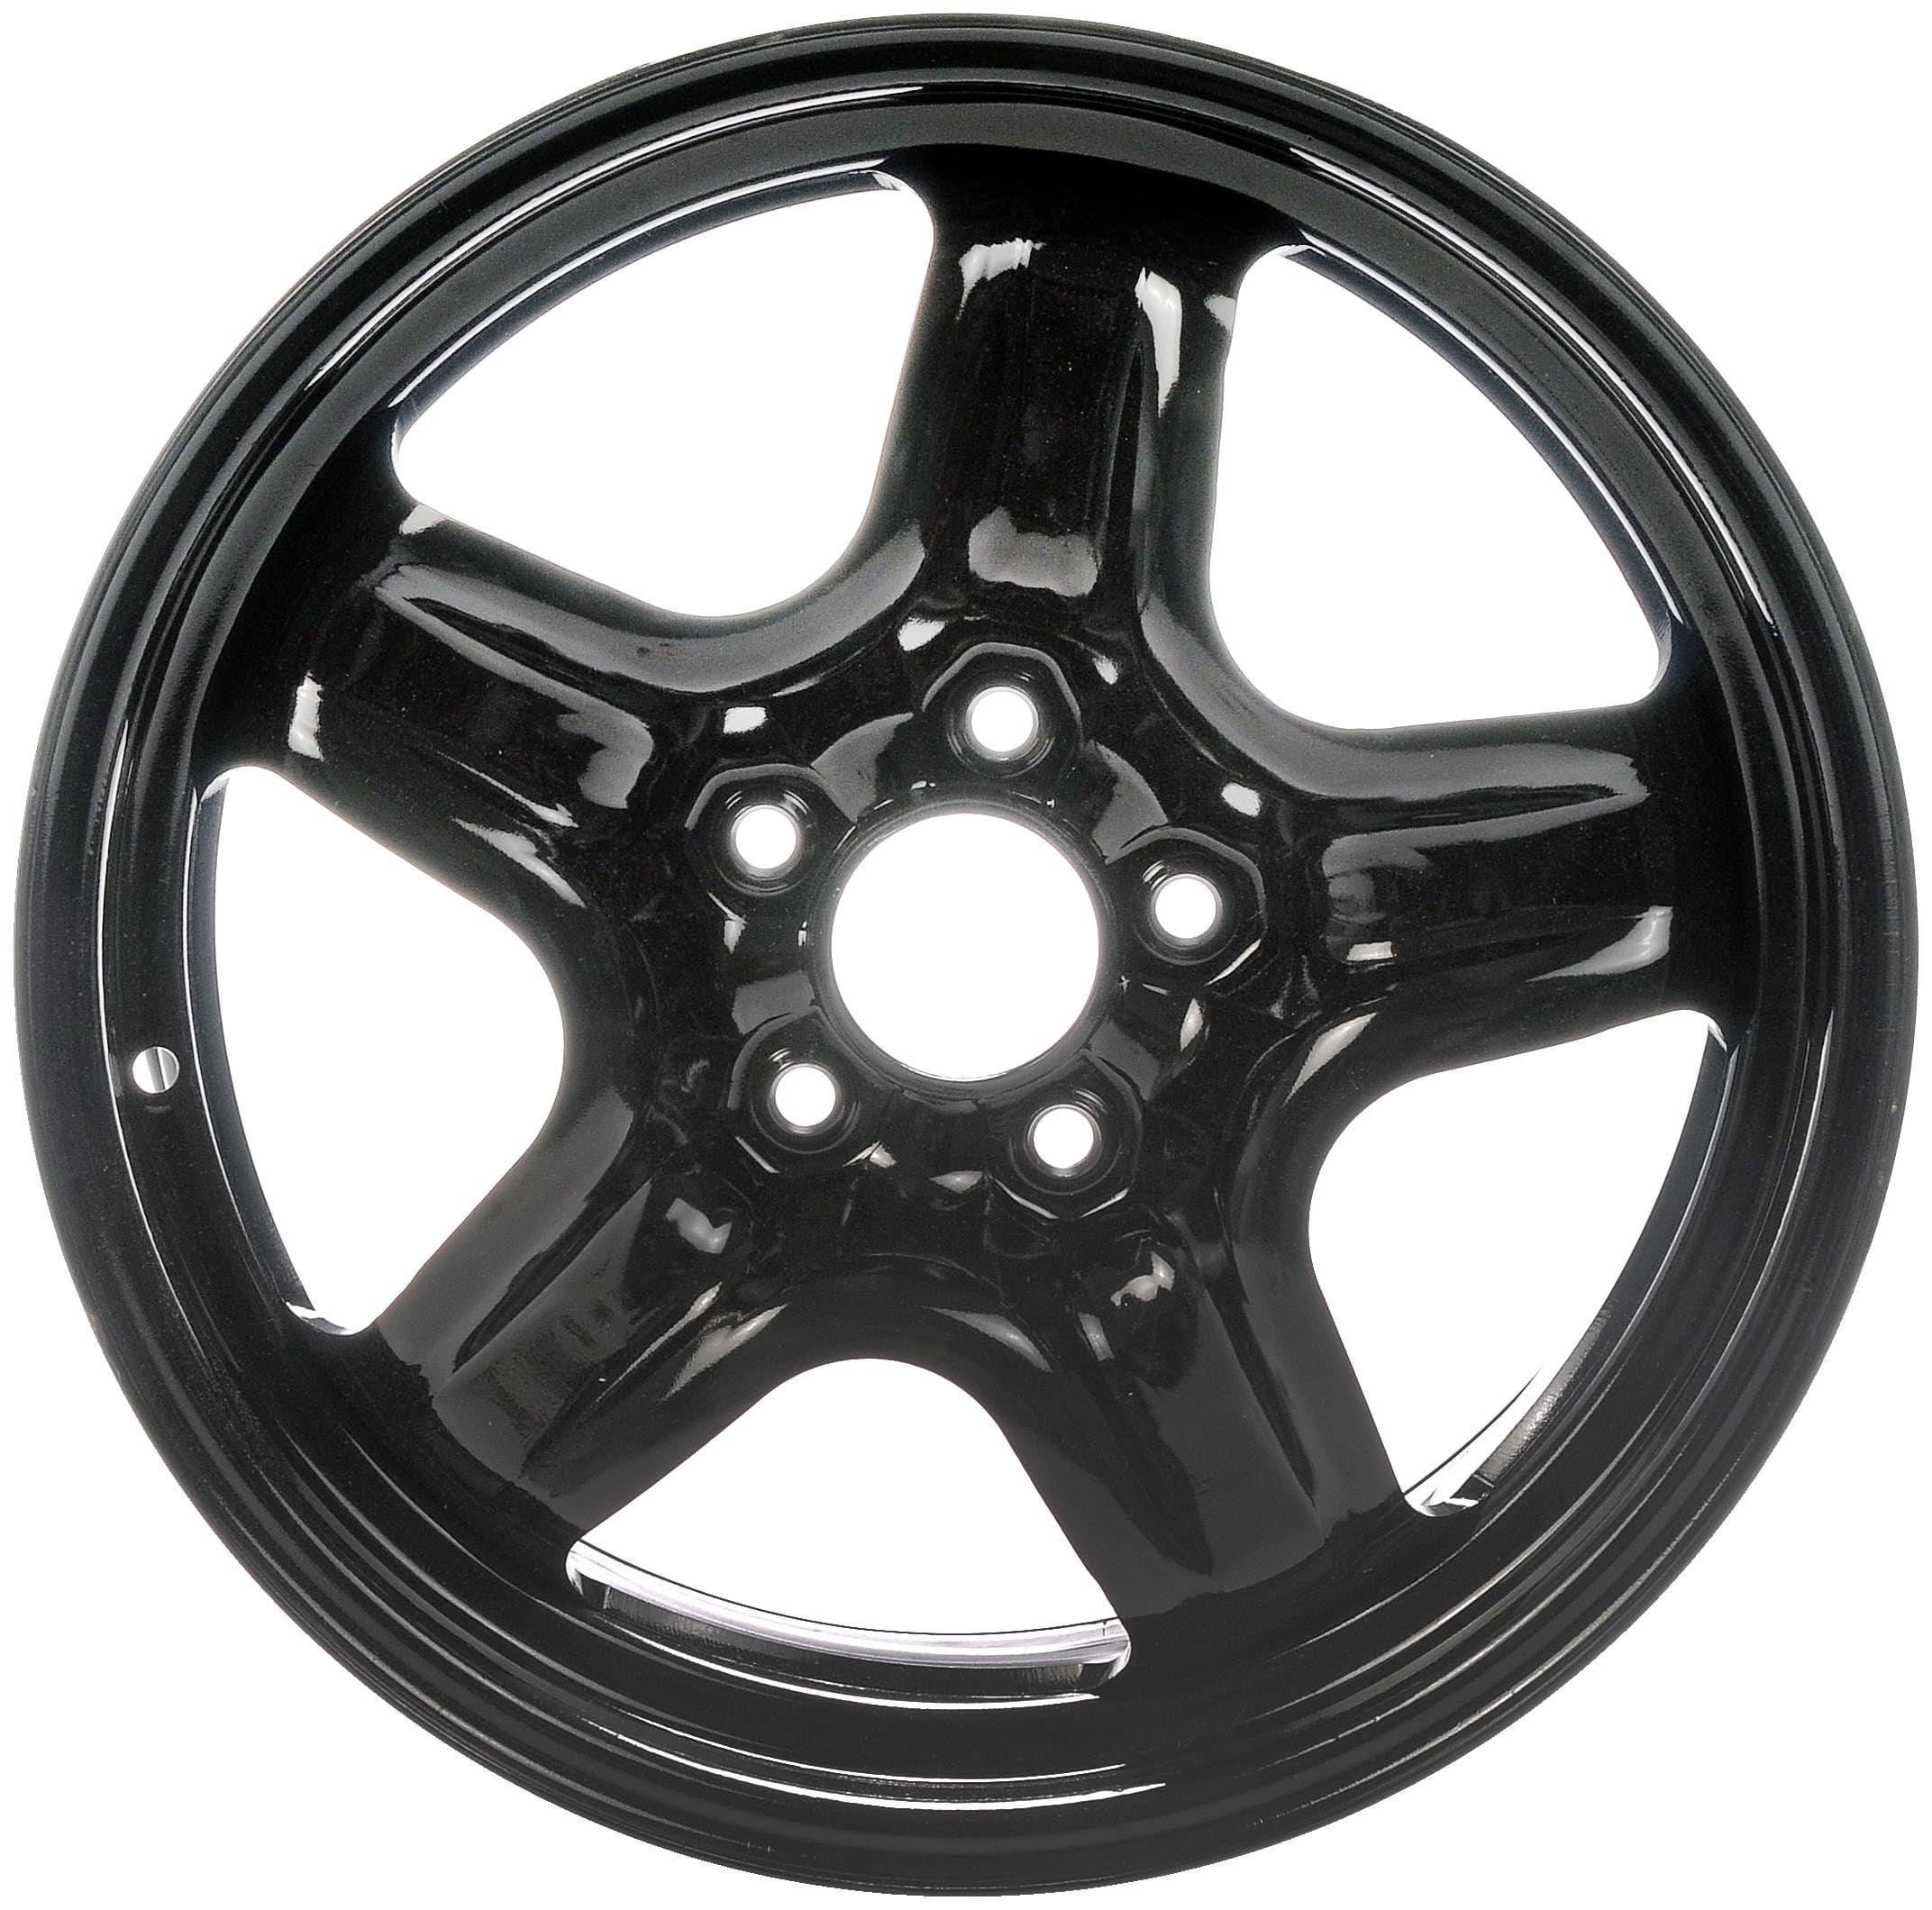 Dorman 939-103 Wheel for Specific Ford / Mercury Models, Black